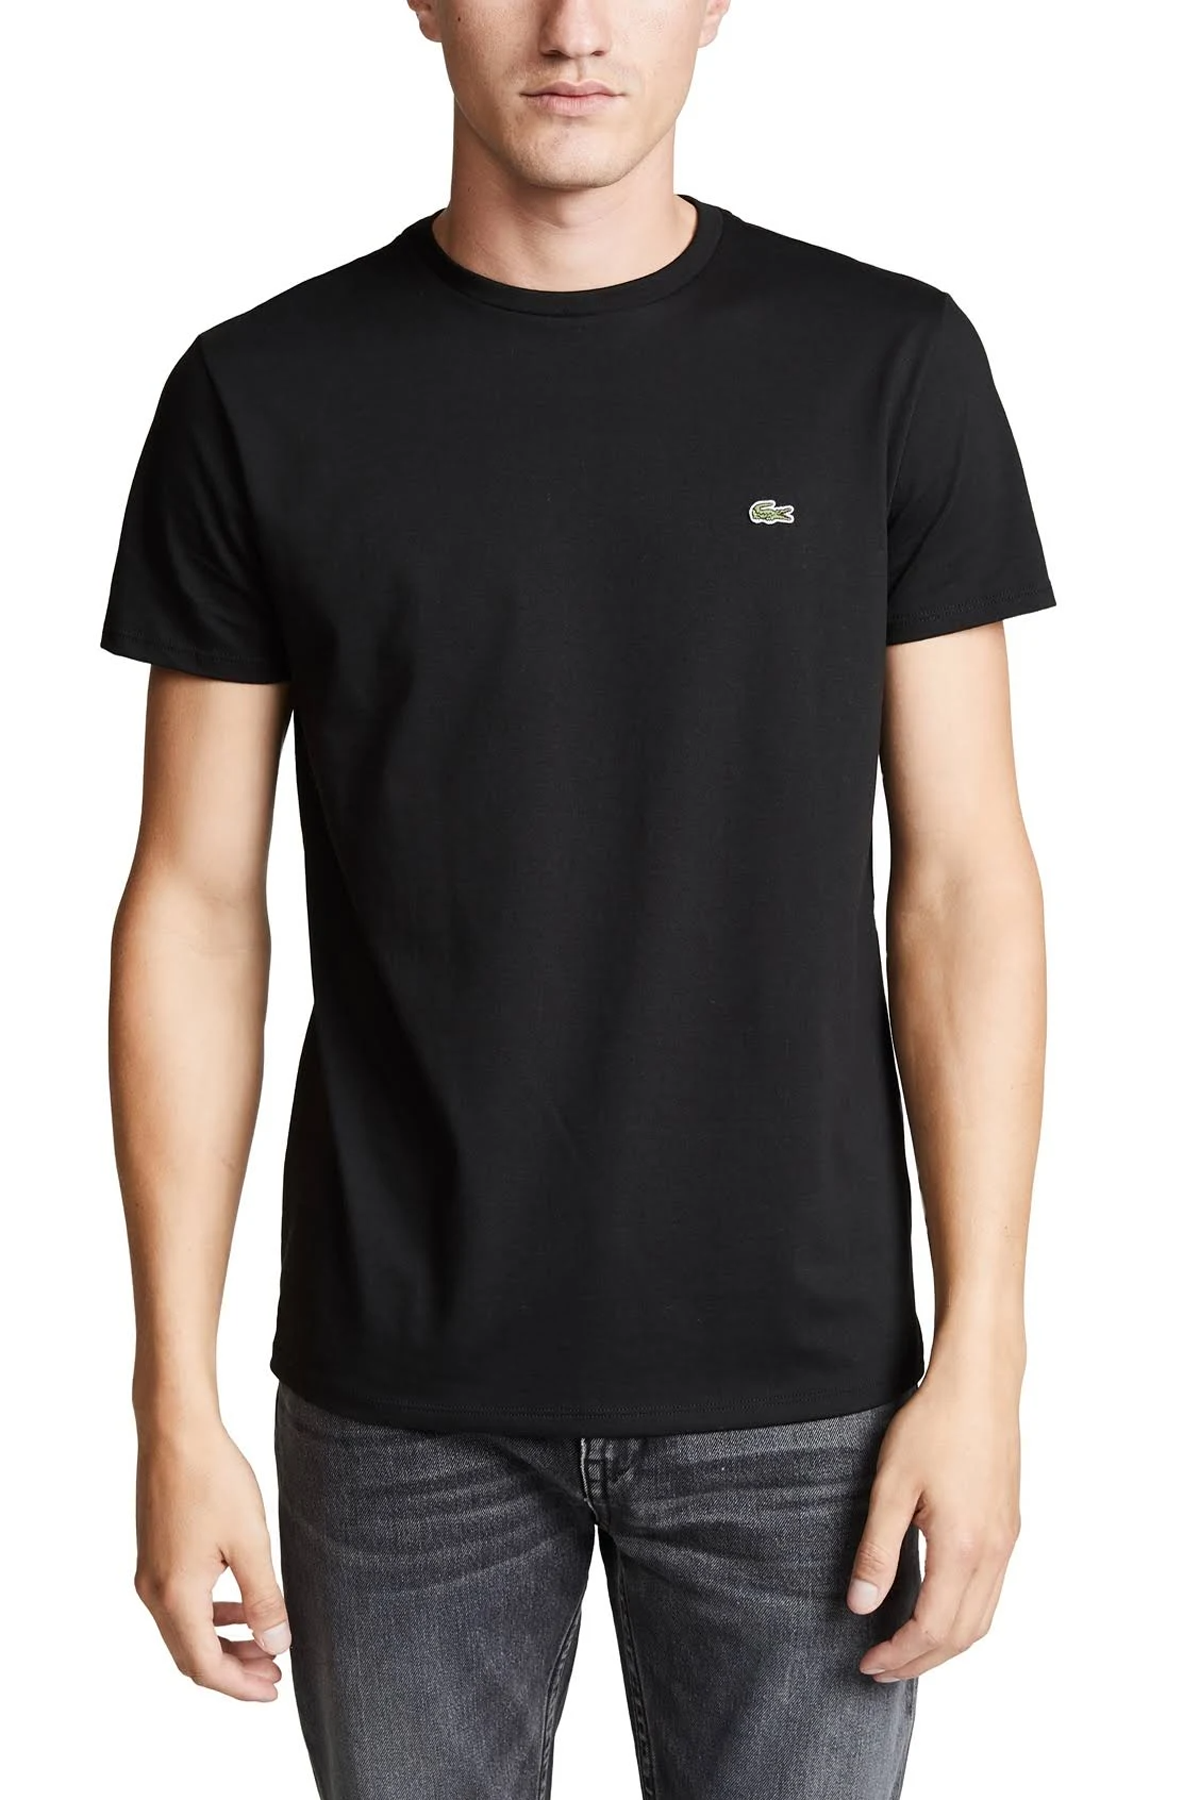 Lacoste Black TH6709 custom work shirts